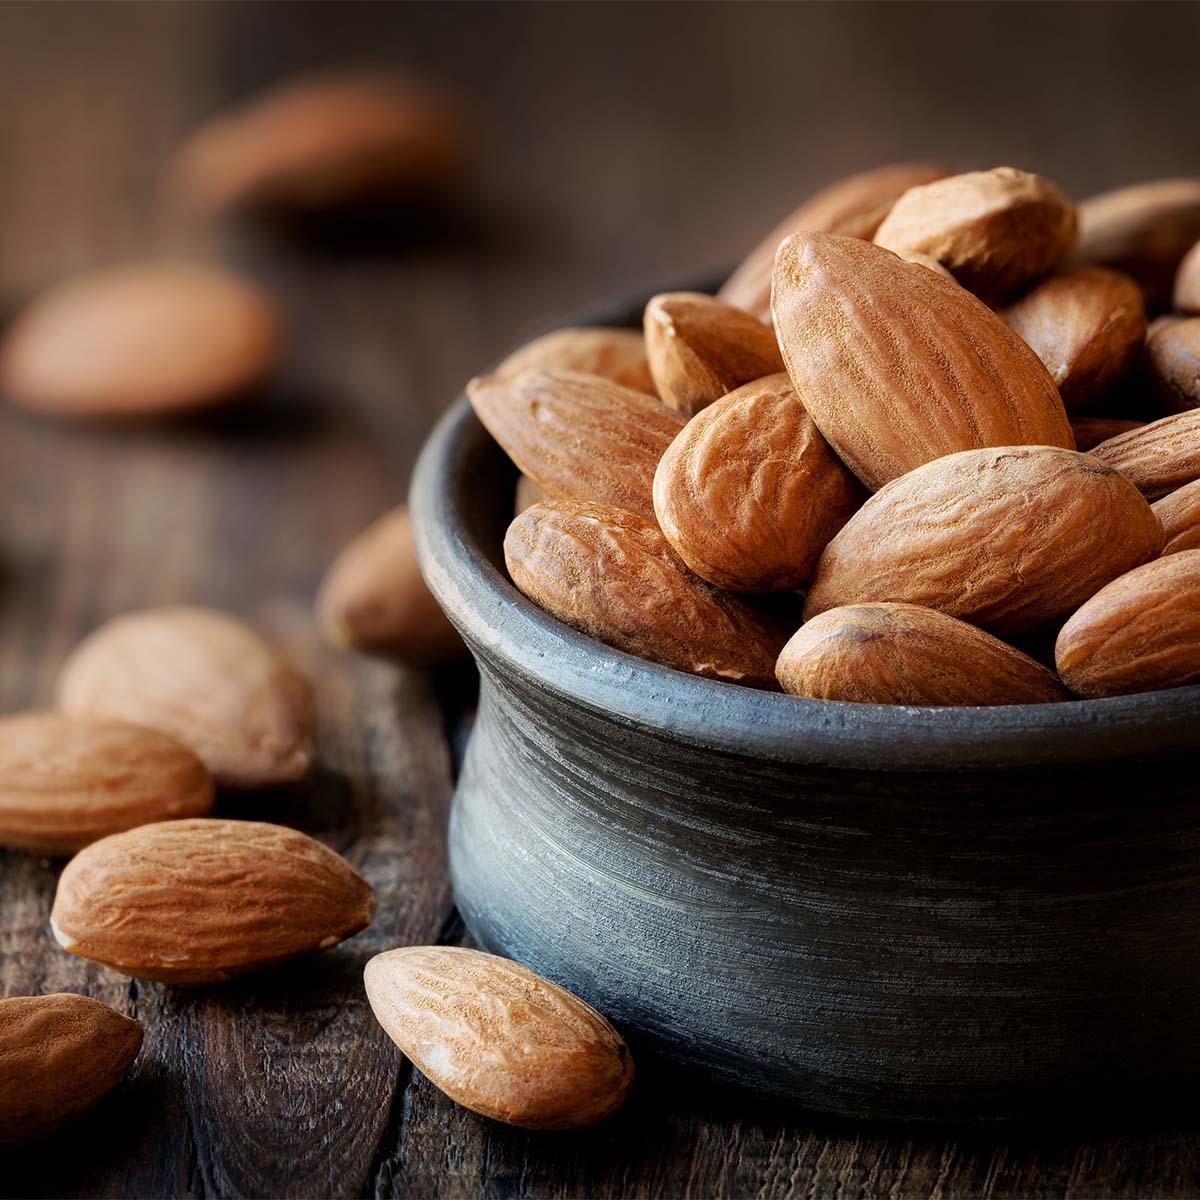 natural granola ingredients like almonds